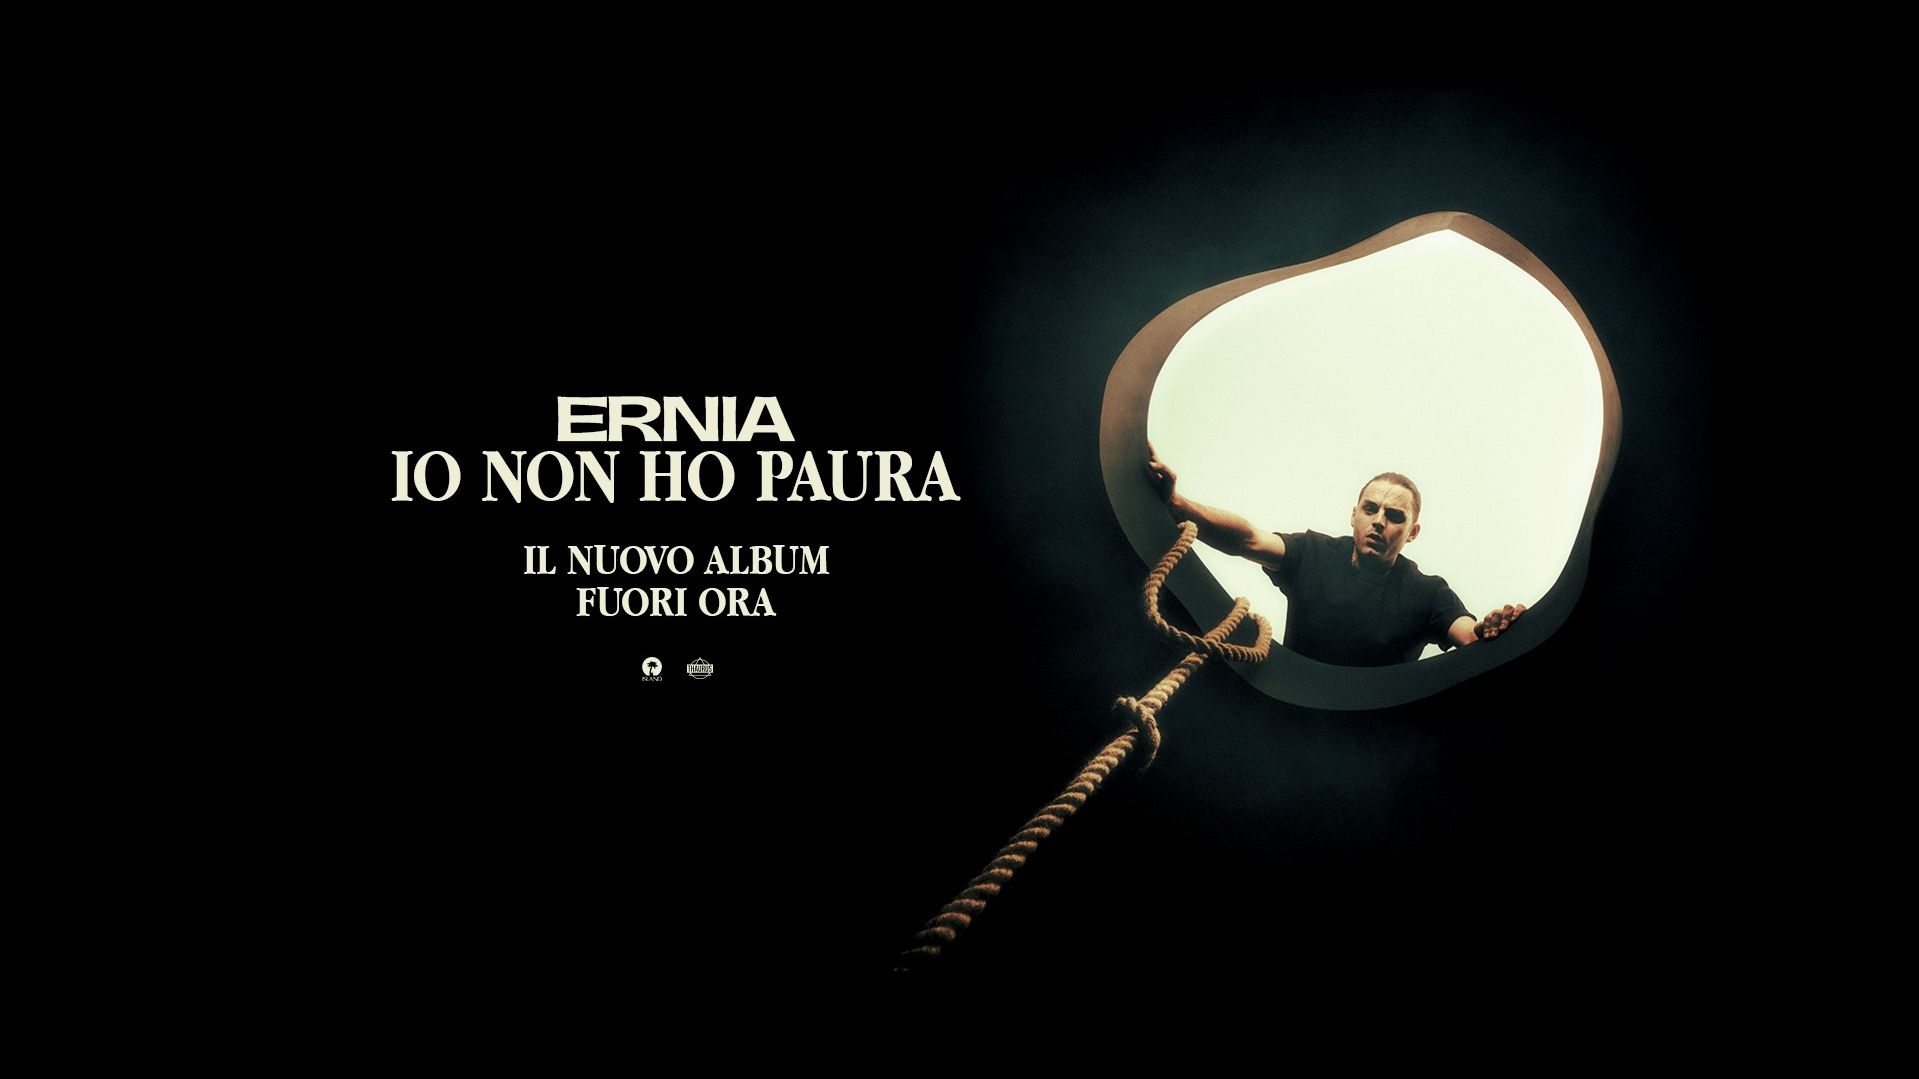 Ernia - "Tutti hanno paura" Tour